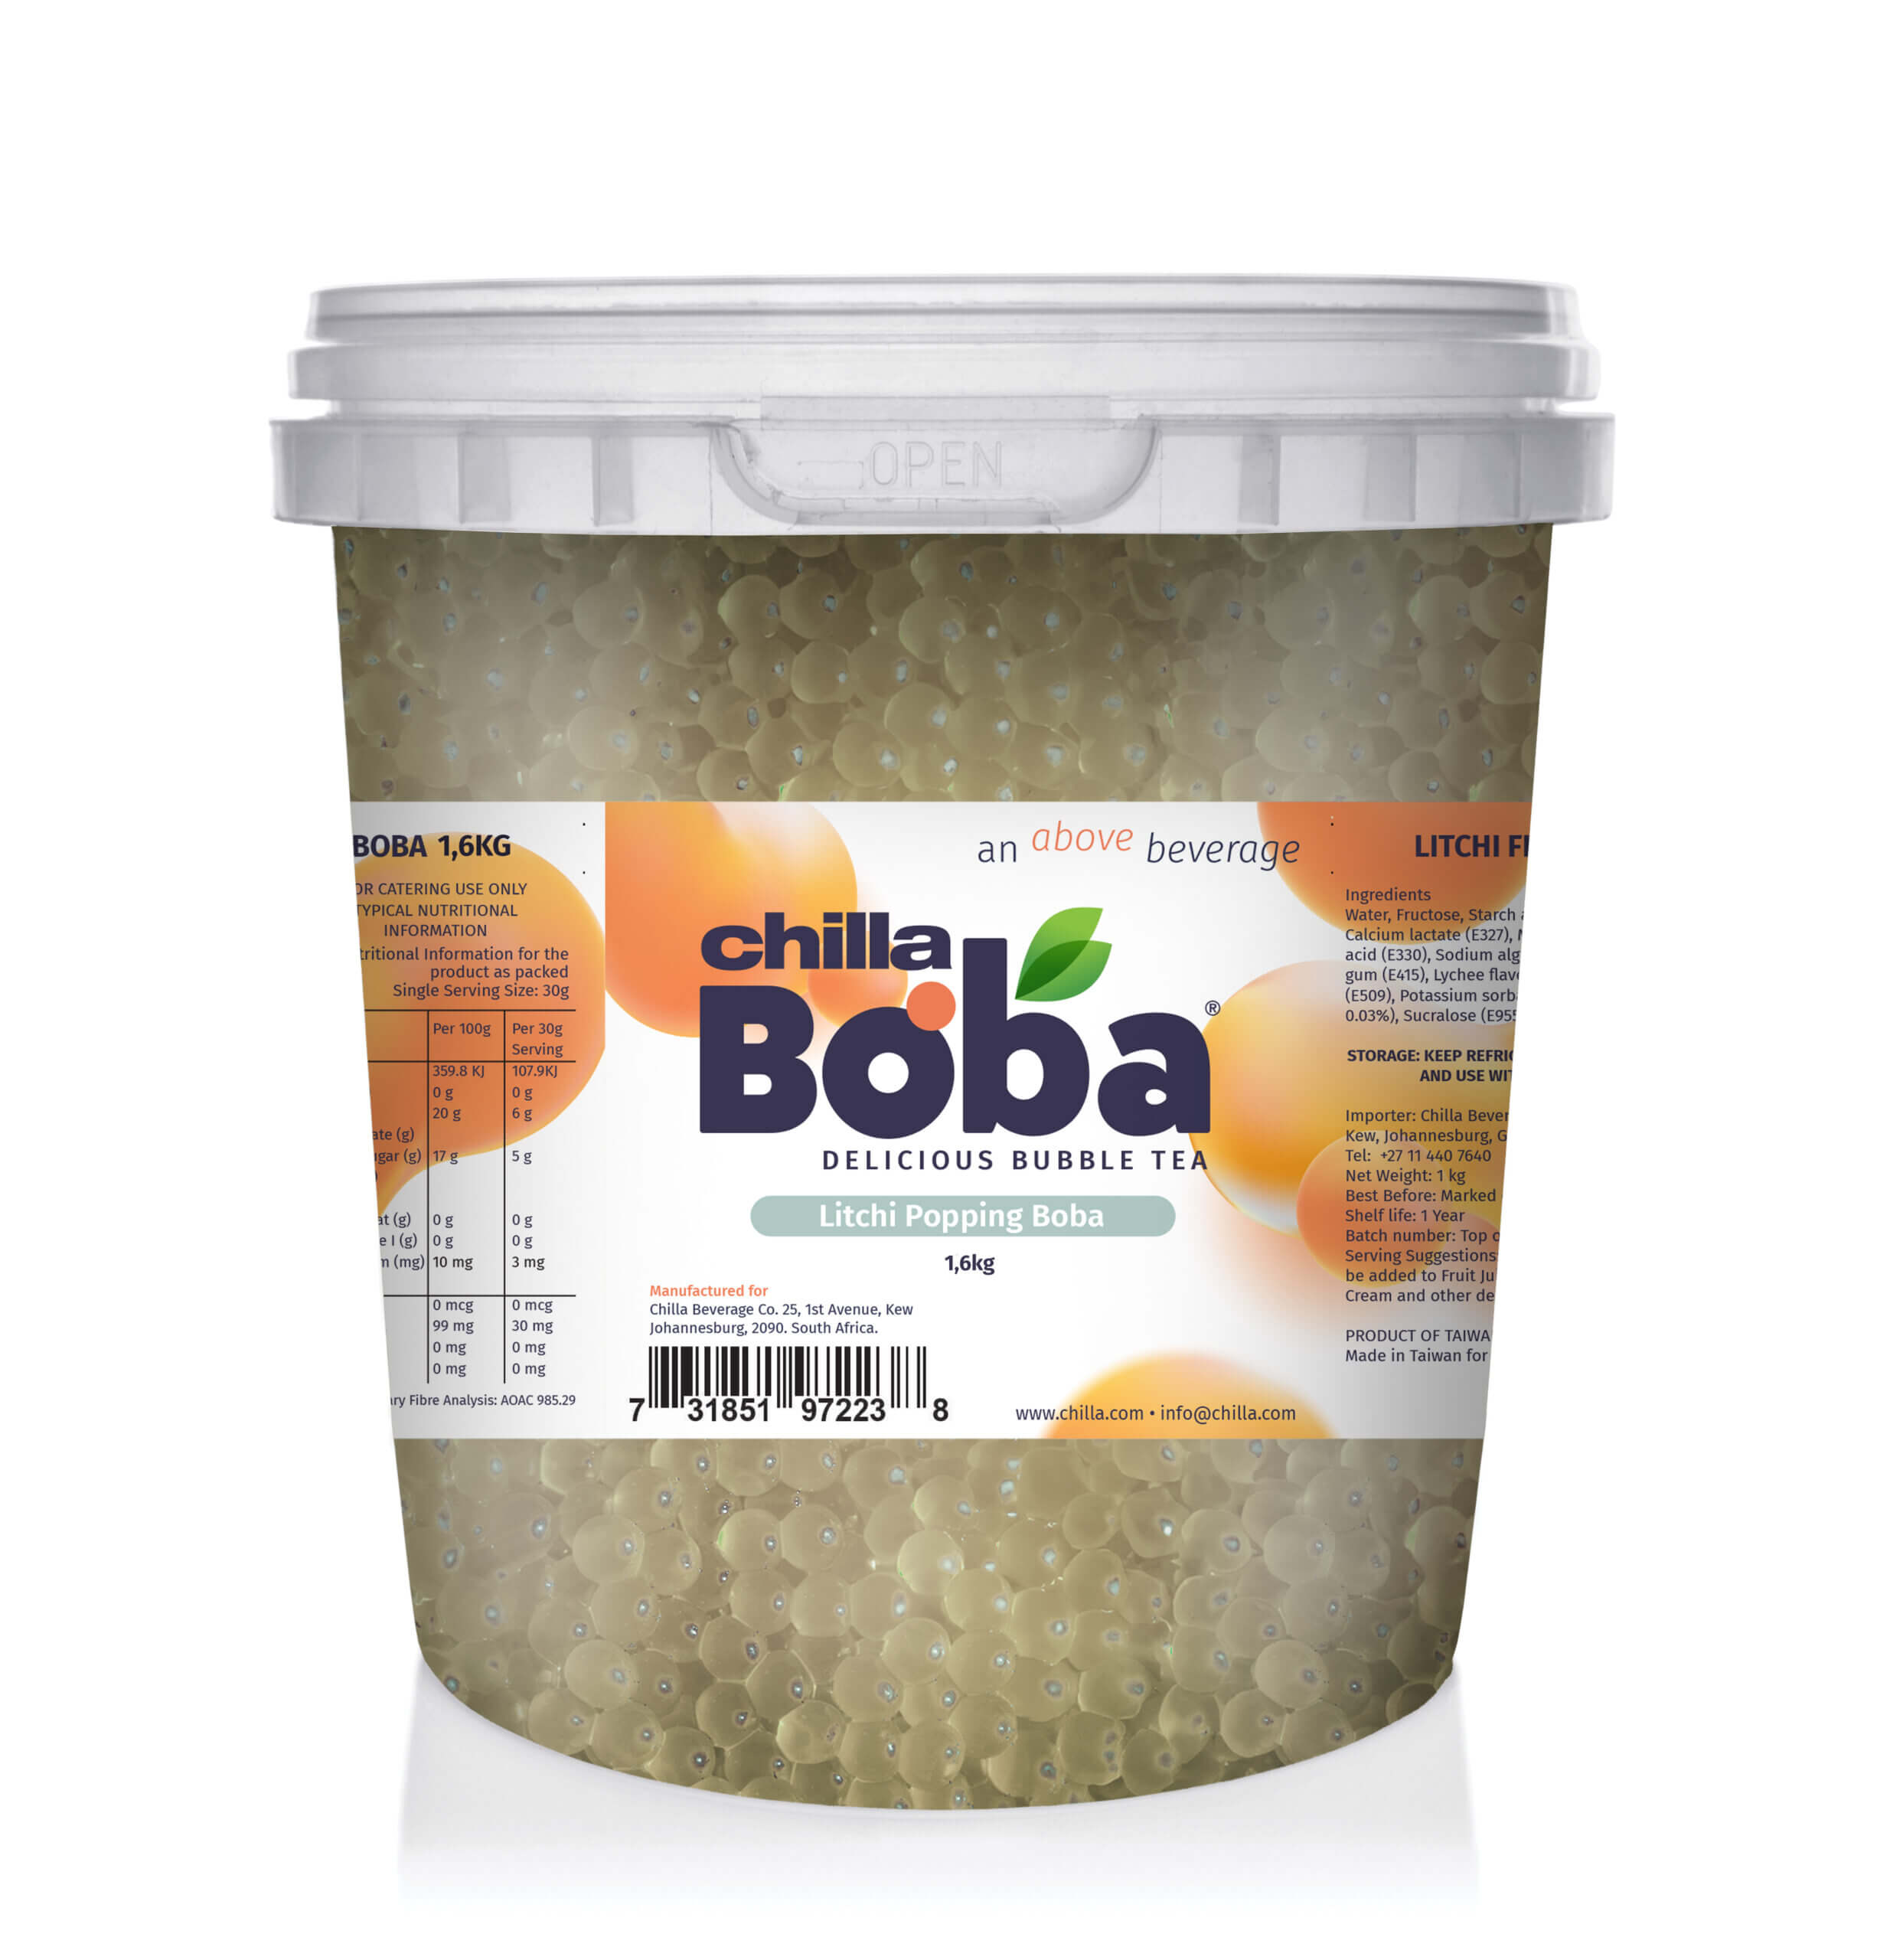 Litchi Popping Boba 1.6kg